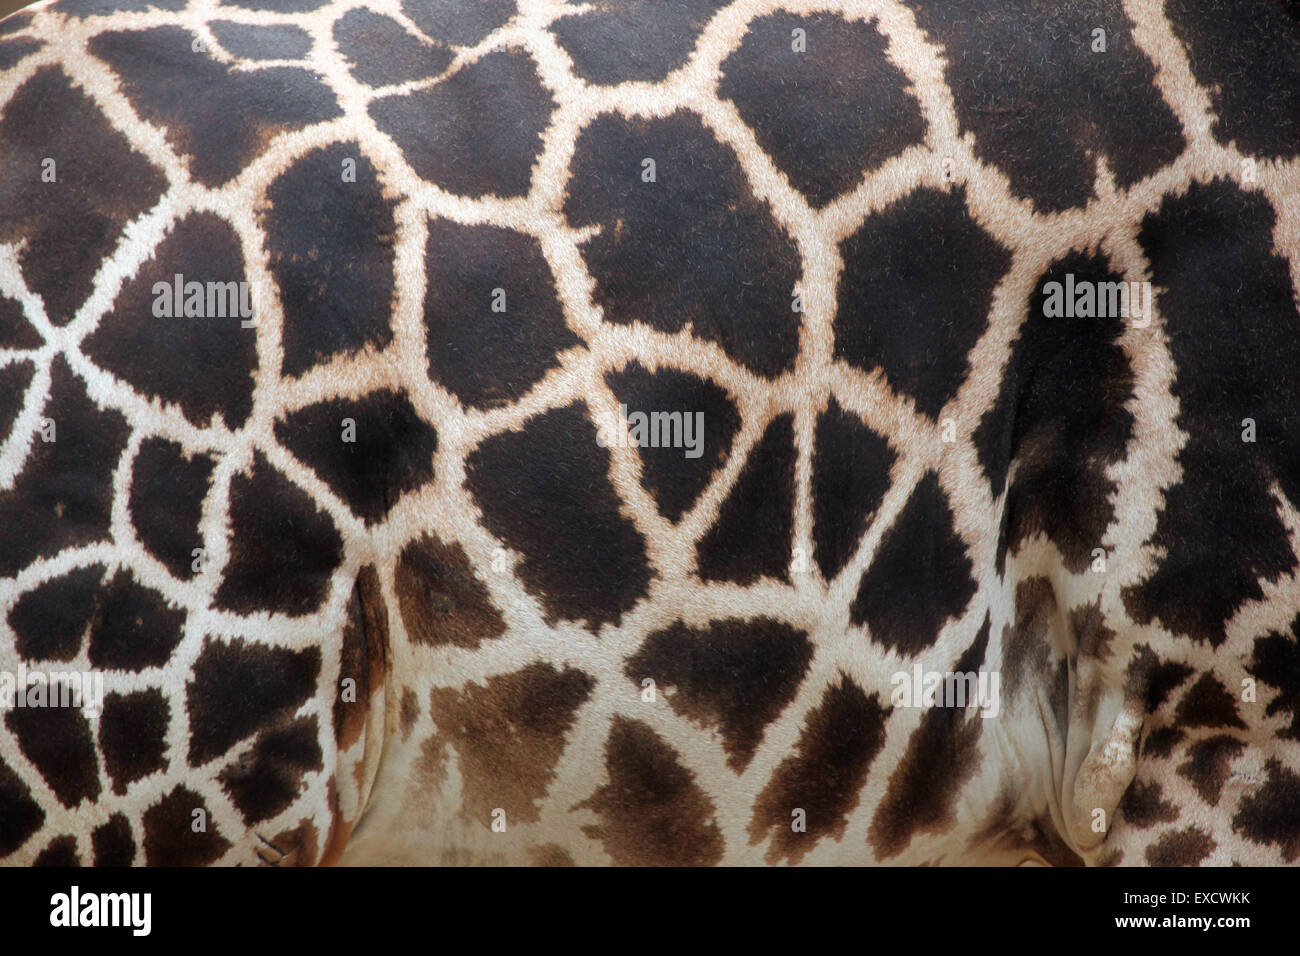 Jirafa de Rothschild (Giraffa camelopardalis rothschildi) la textura de la piel. Foto de stock